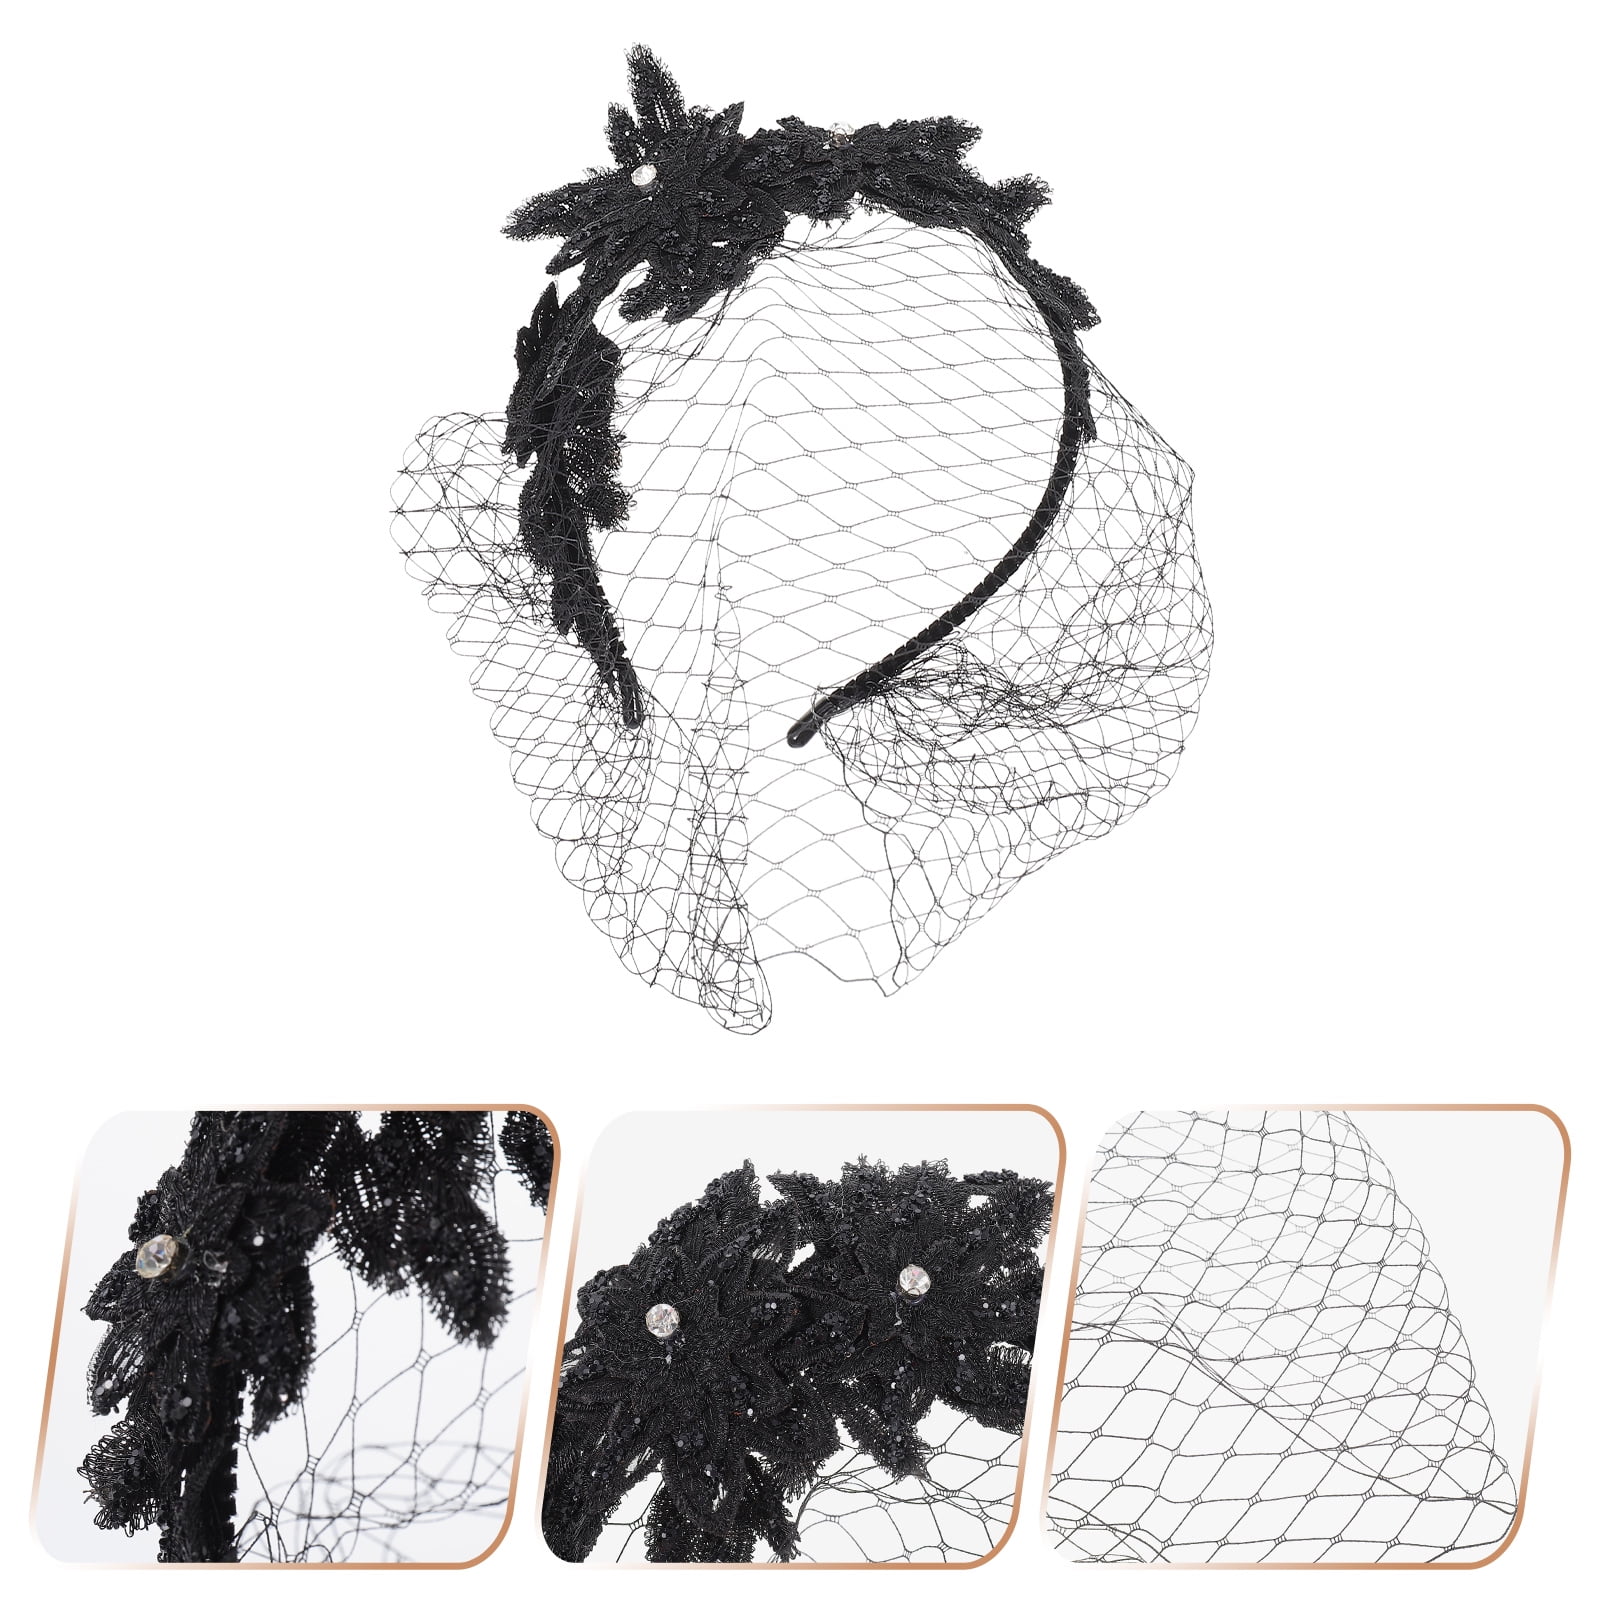 Frcolor Lace Mesh Veil Headband Veil Hair Accessory Elegant Bridal Veil Headband Black, Size: 15x14x10CM